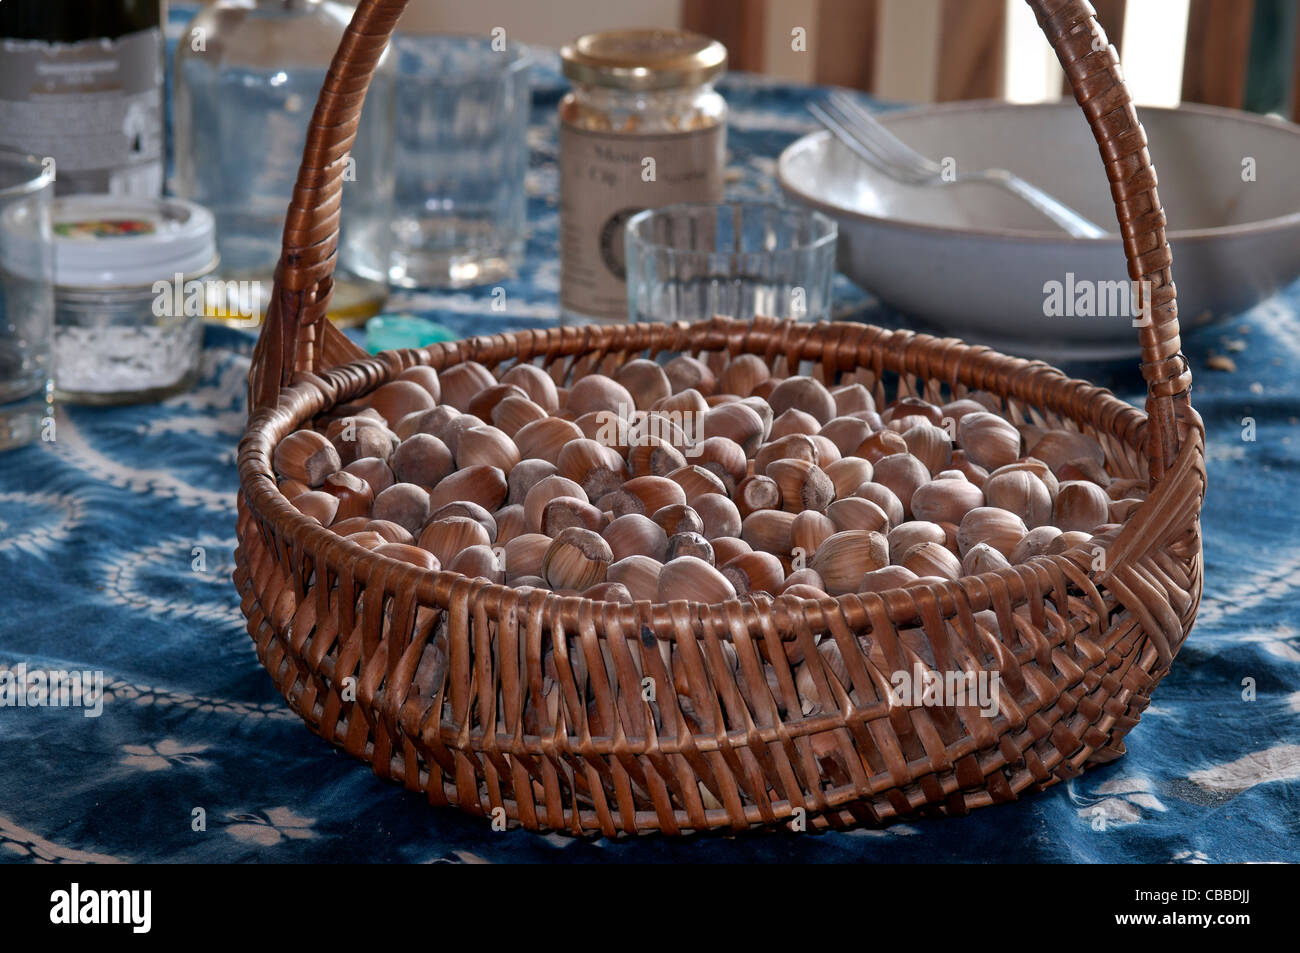 Basket full of hazelnuts on the table Stock Photo